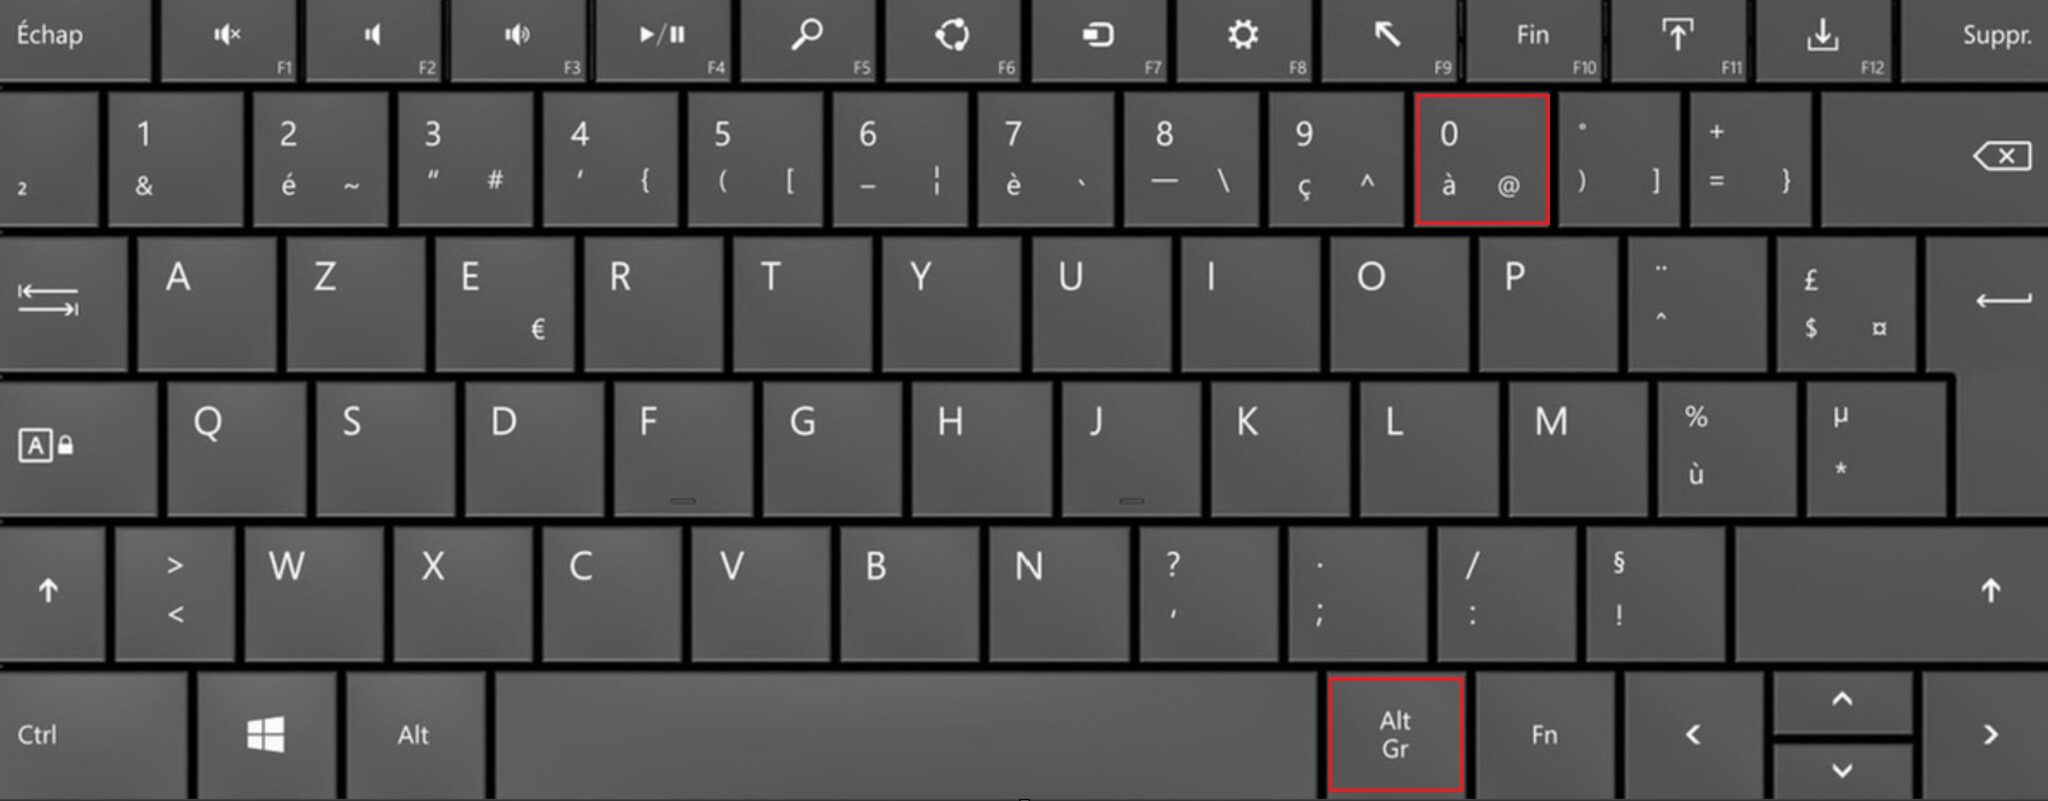 Ecrire arobase sur clavier Azerty Windows